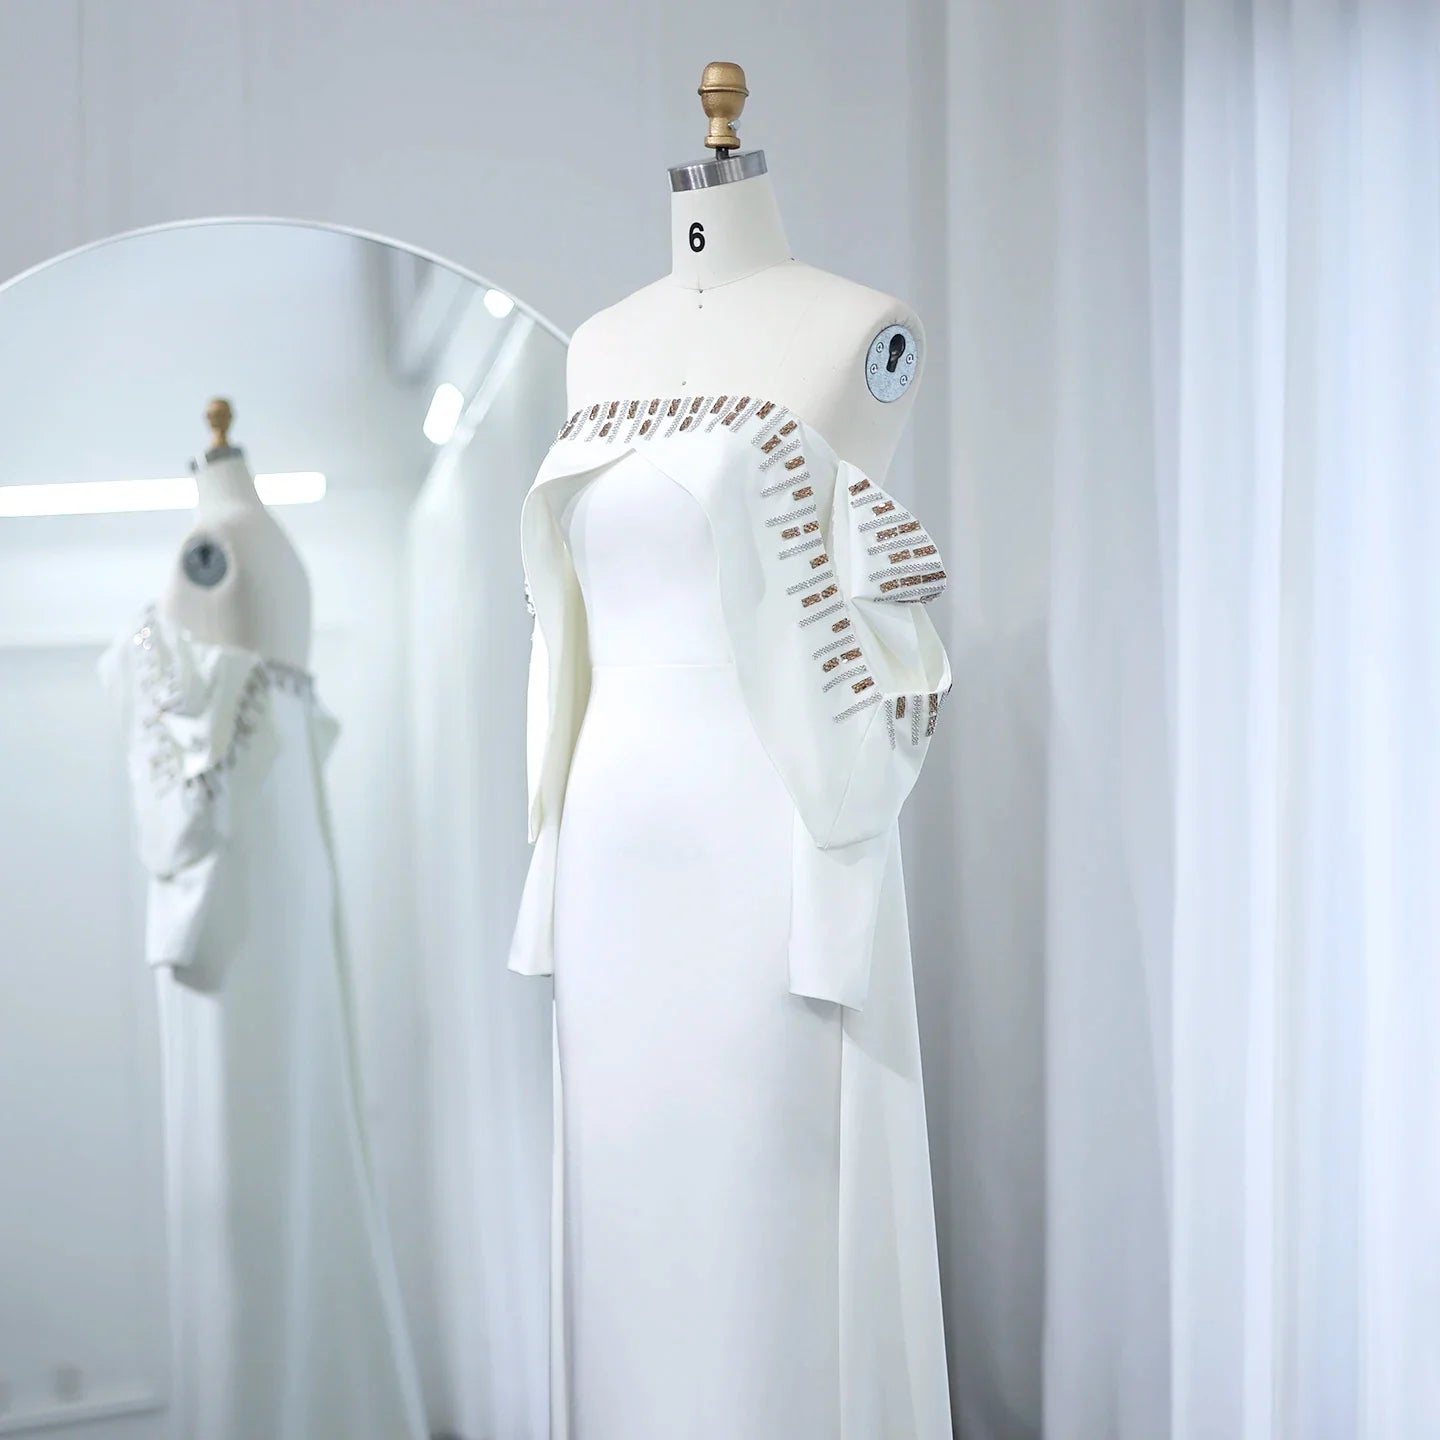 Gaun malam dubai dubai putih yang elegan dengan lengan panjang cape long dari bahu Arab Pesta Pesta